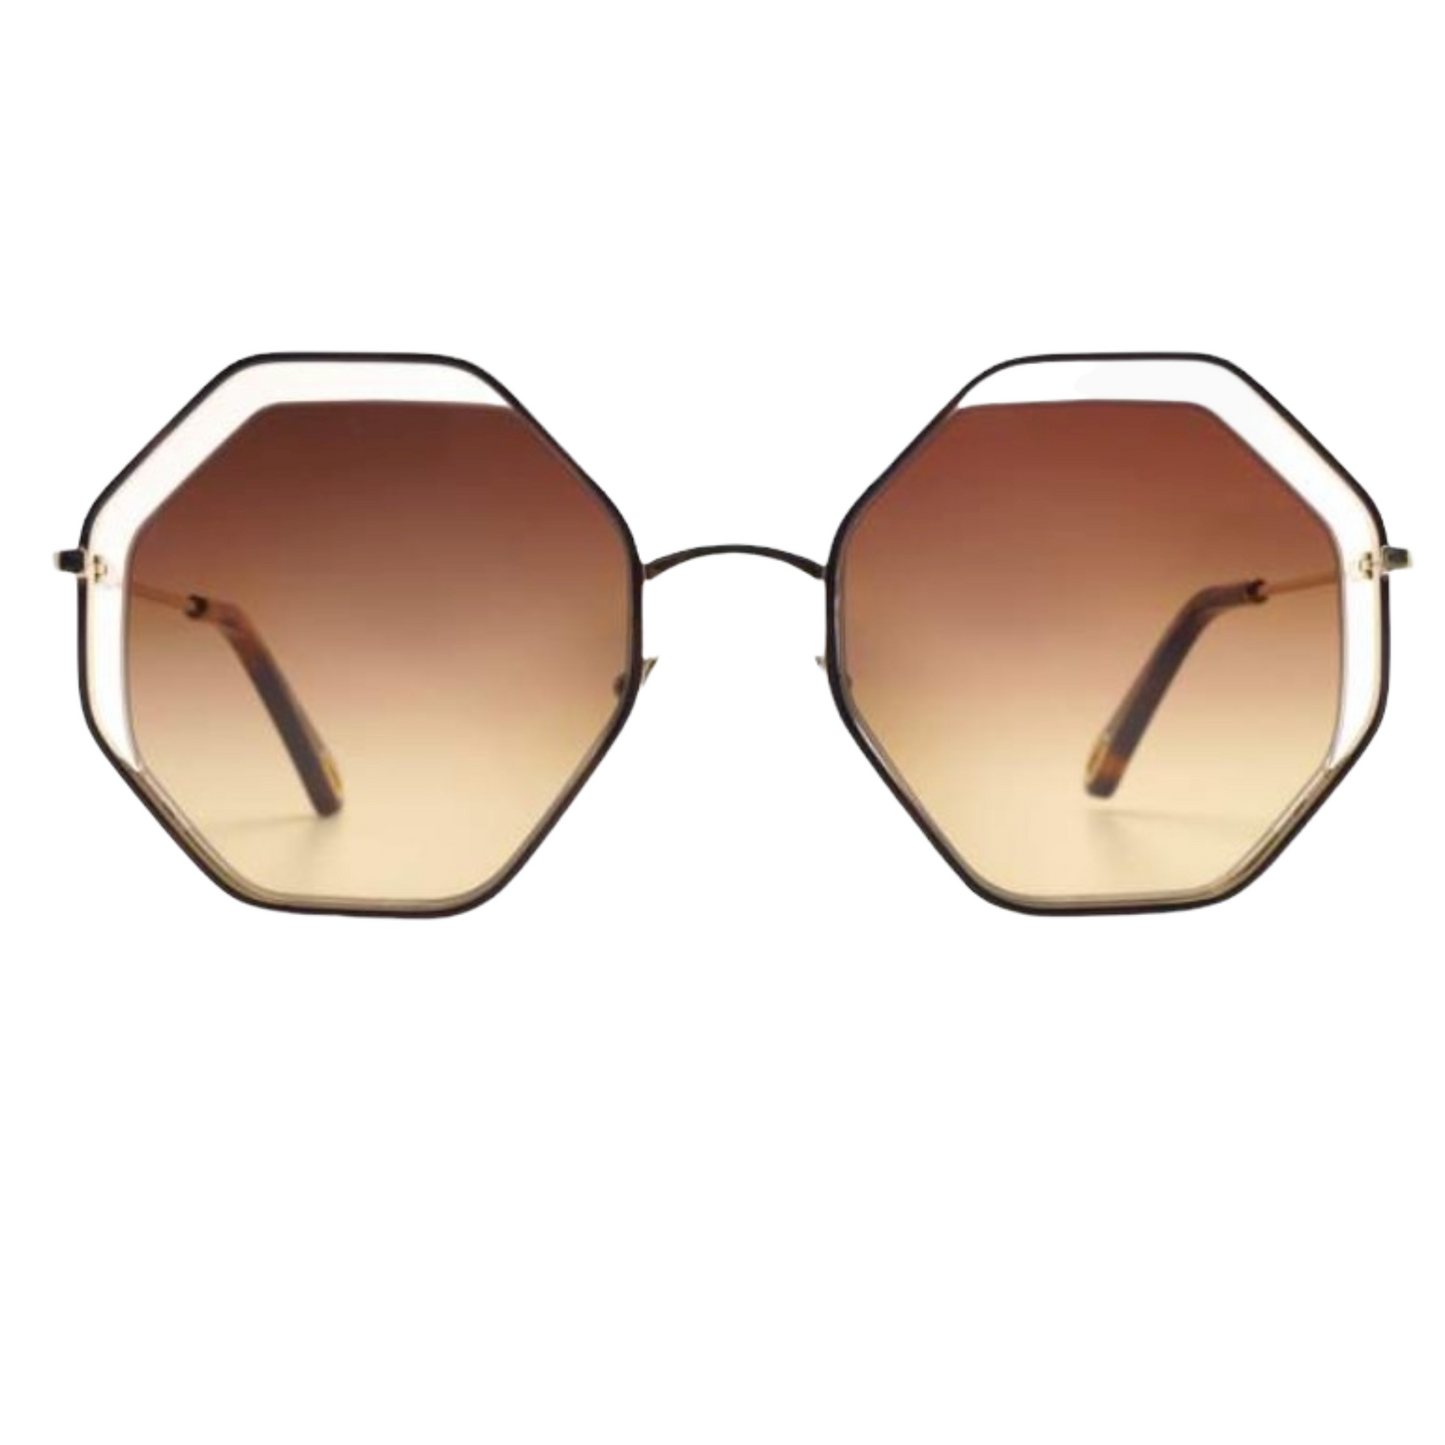 CHLOE Sunglasses vintage Lysis Paris pre-owned secondhand